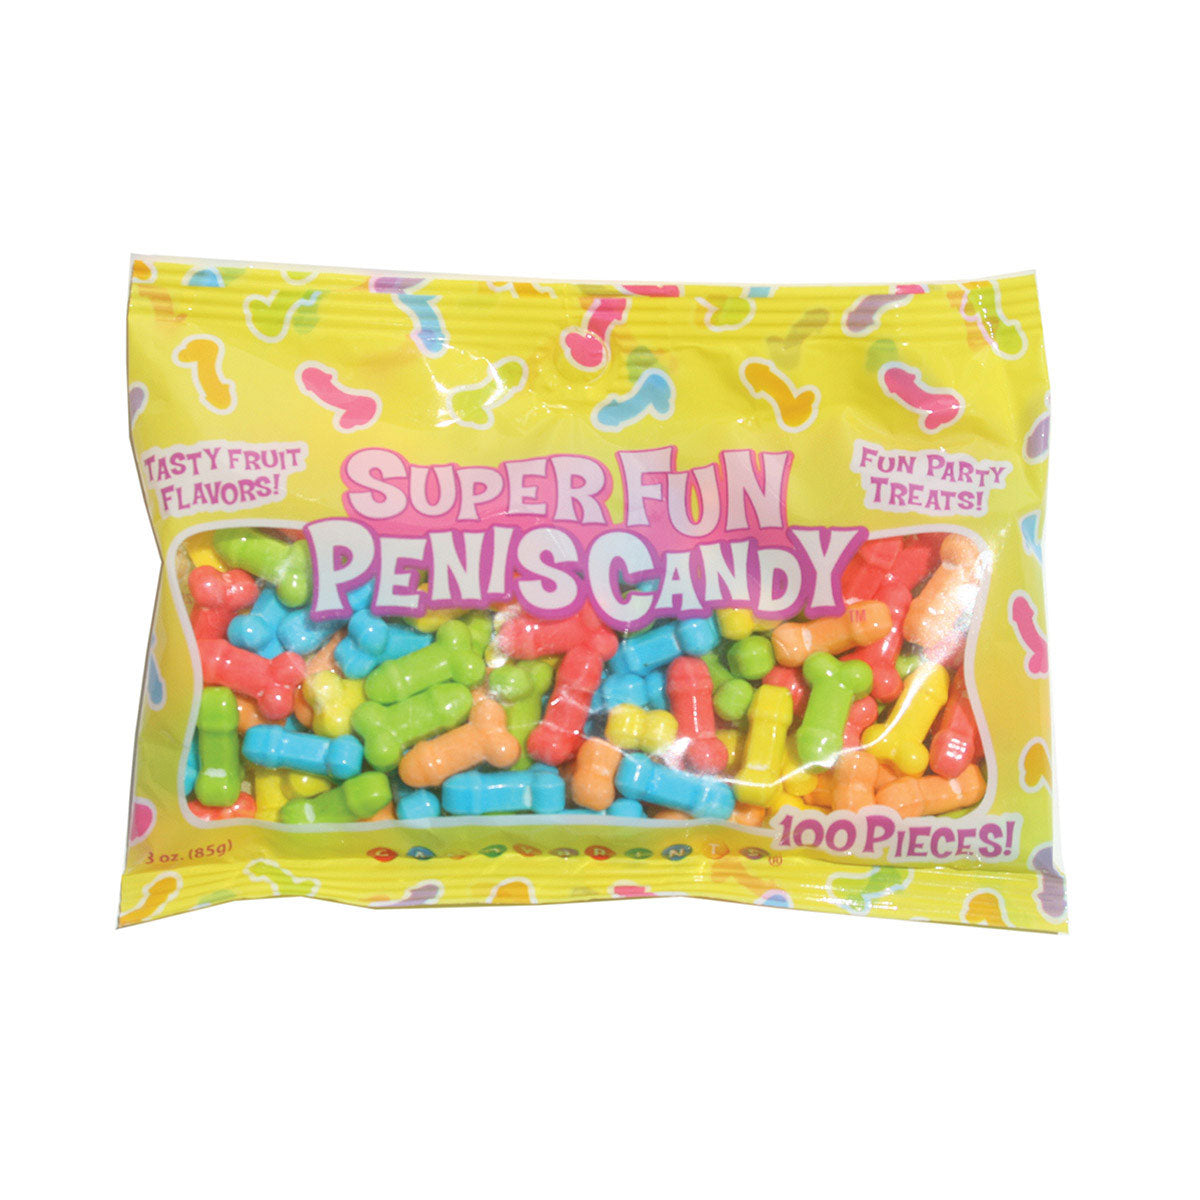 Super Fun Penis Candy 3oz Bag